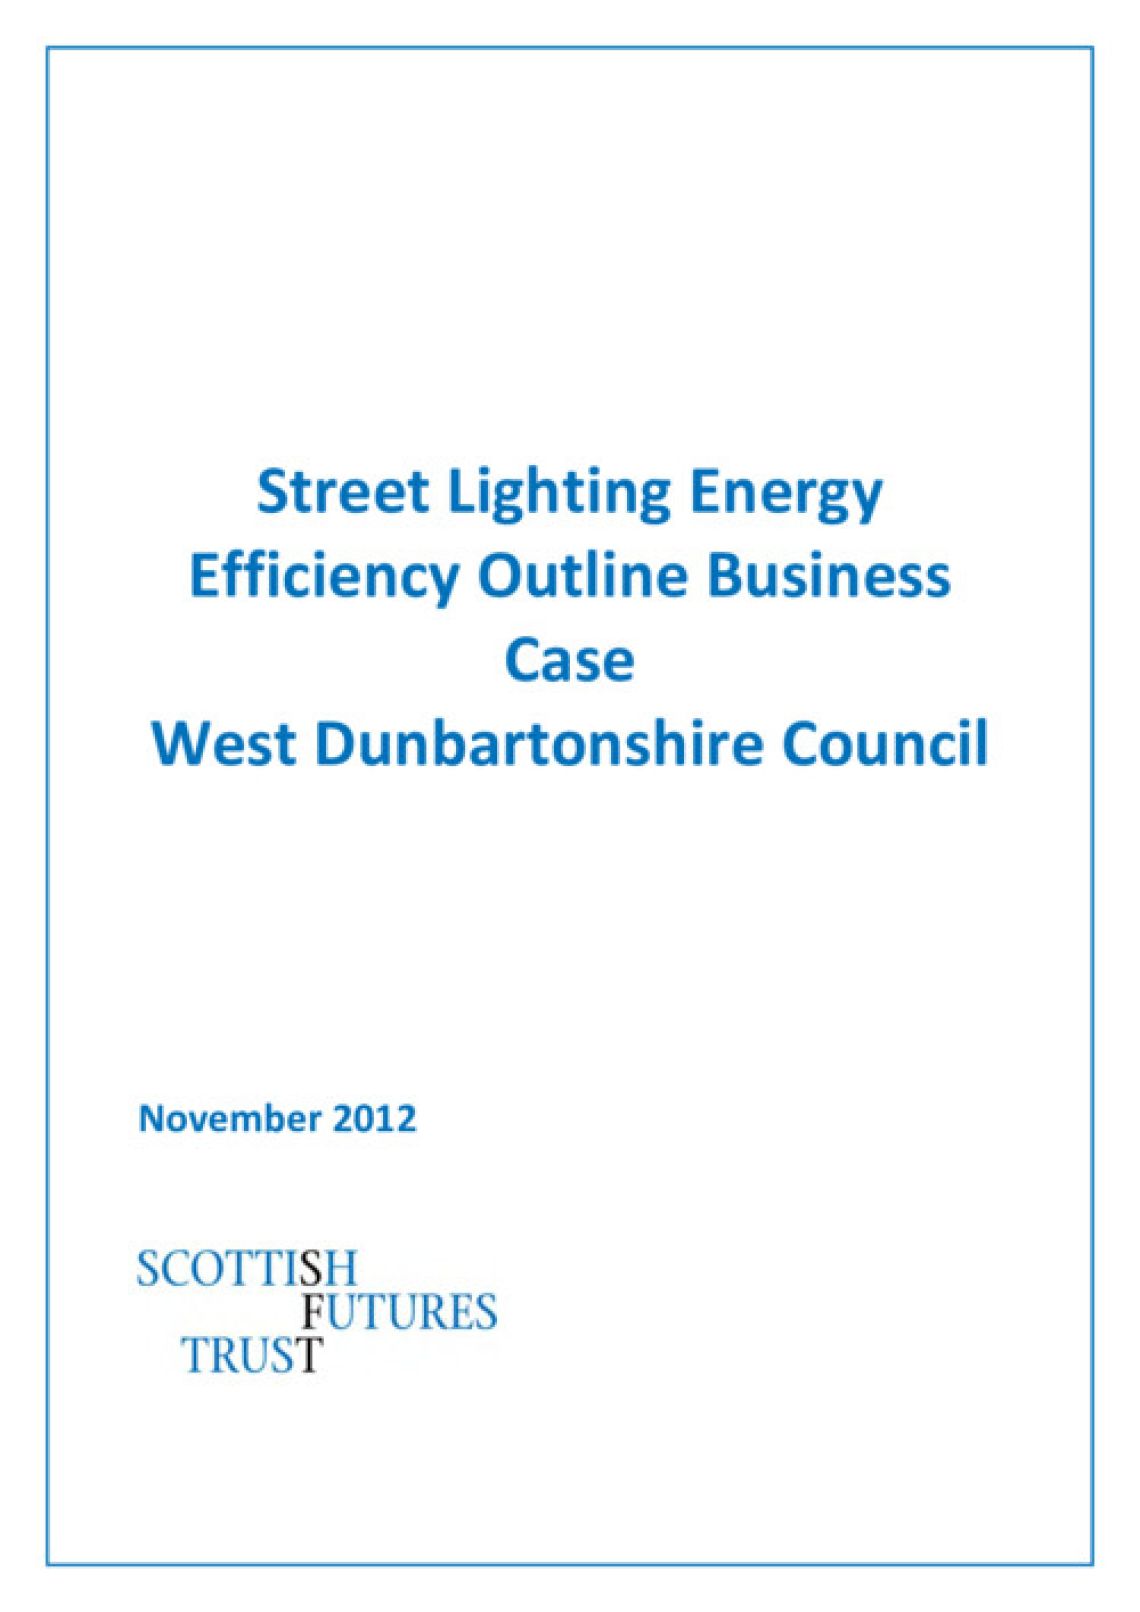 West Dunbartonshire Council - Street Lighting Business Case cover